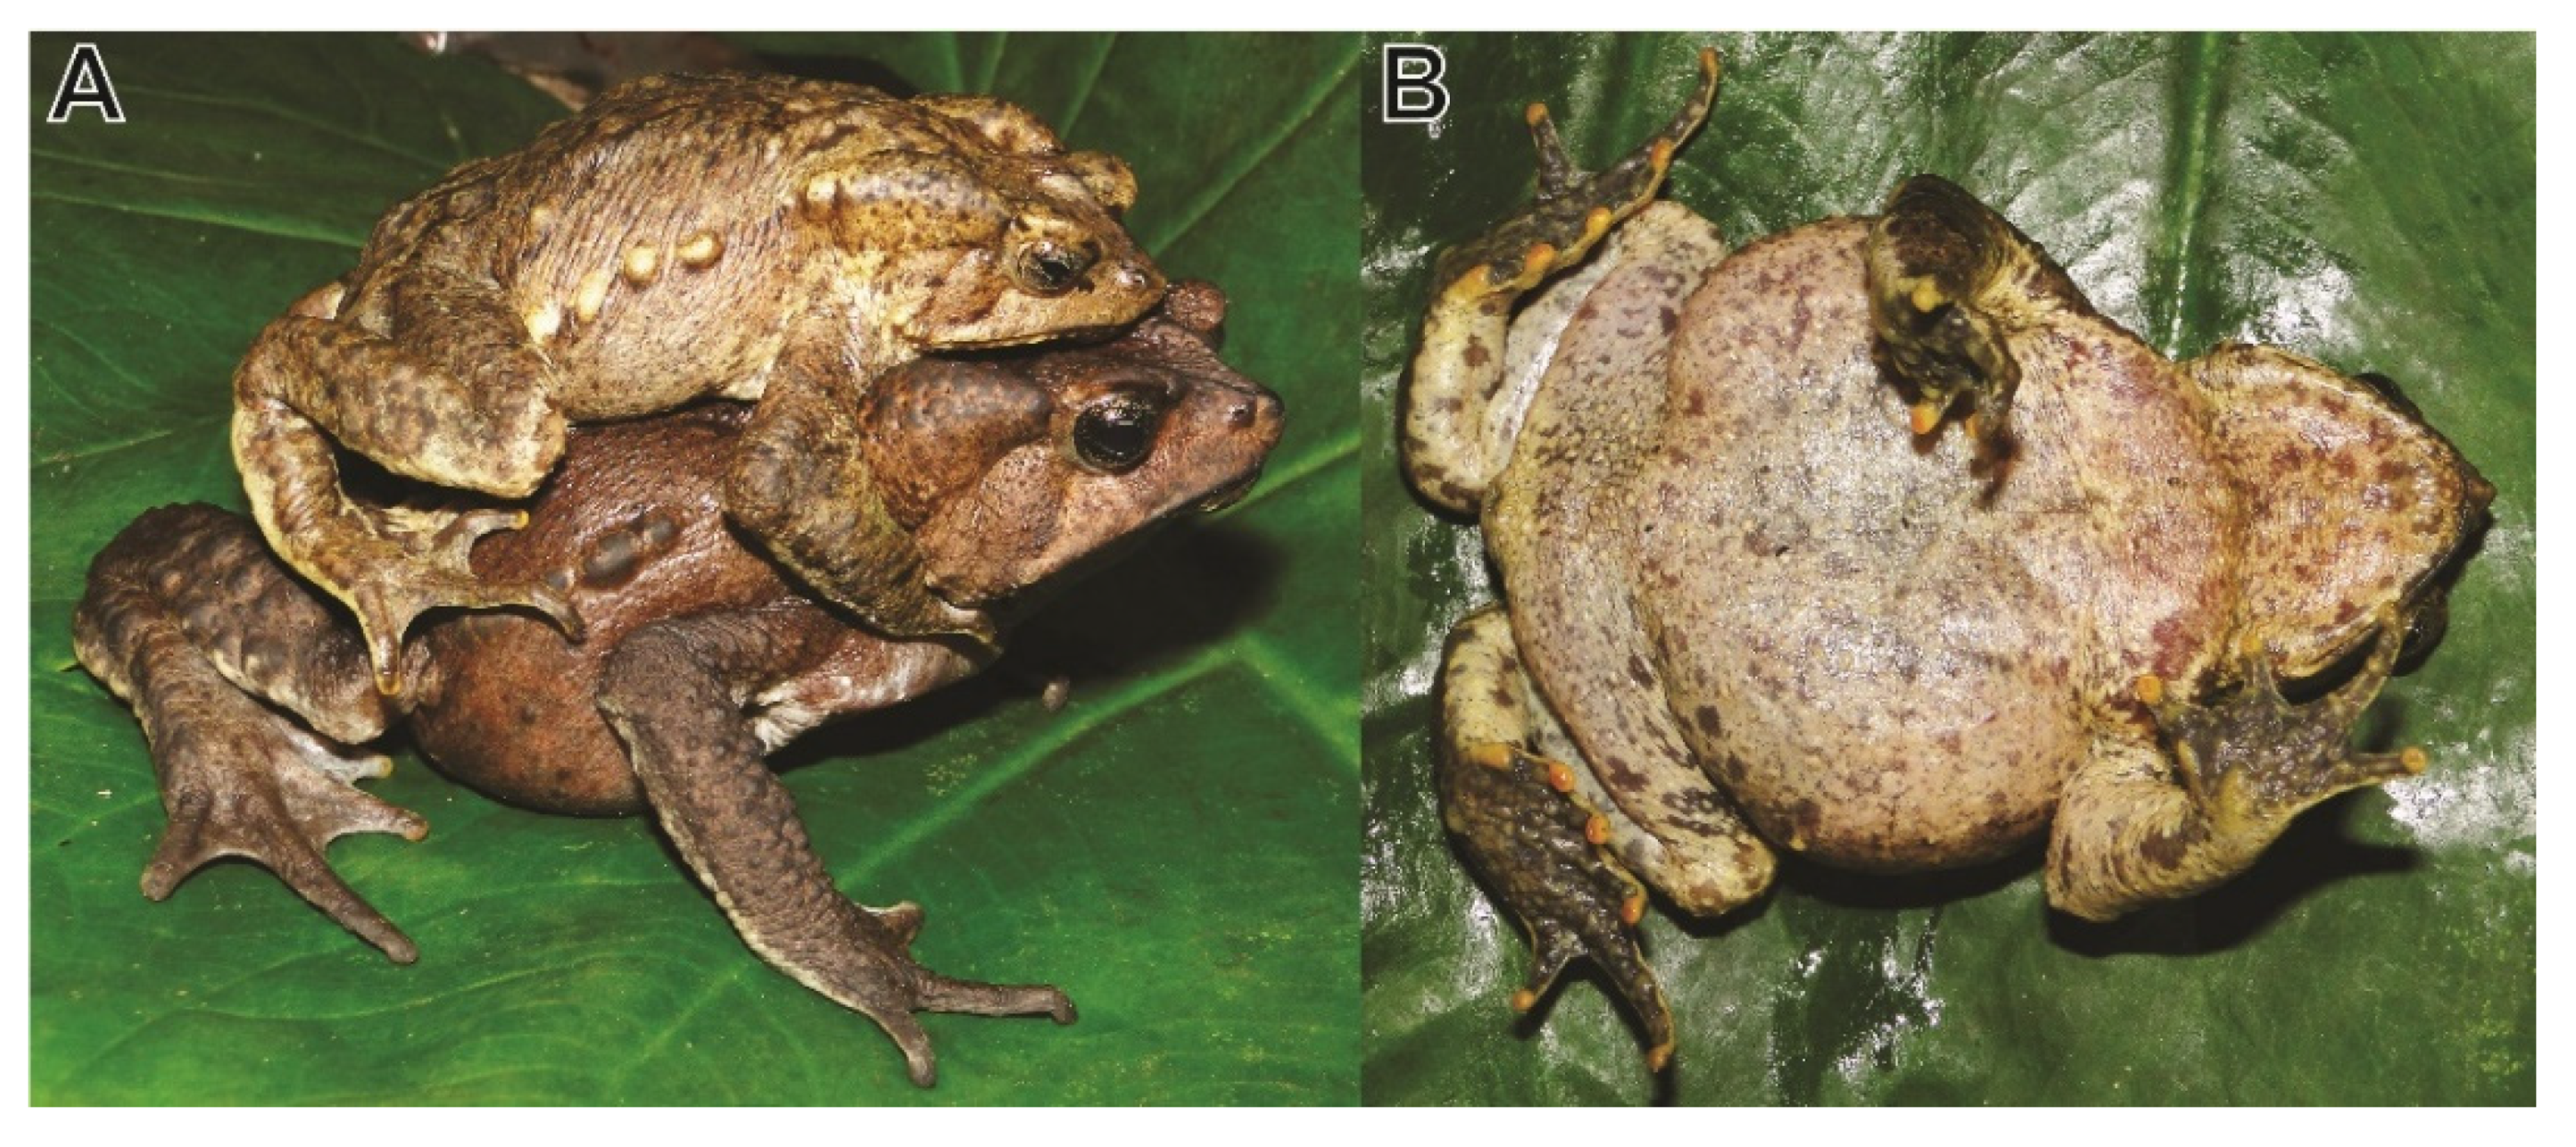 Cane Toad Trap Stem Challenge, PDF